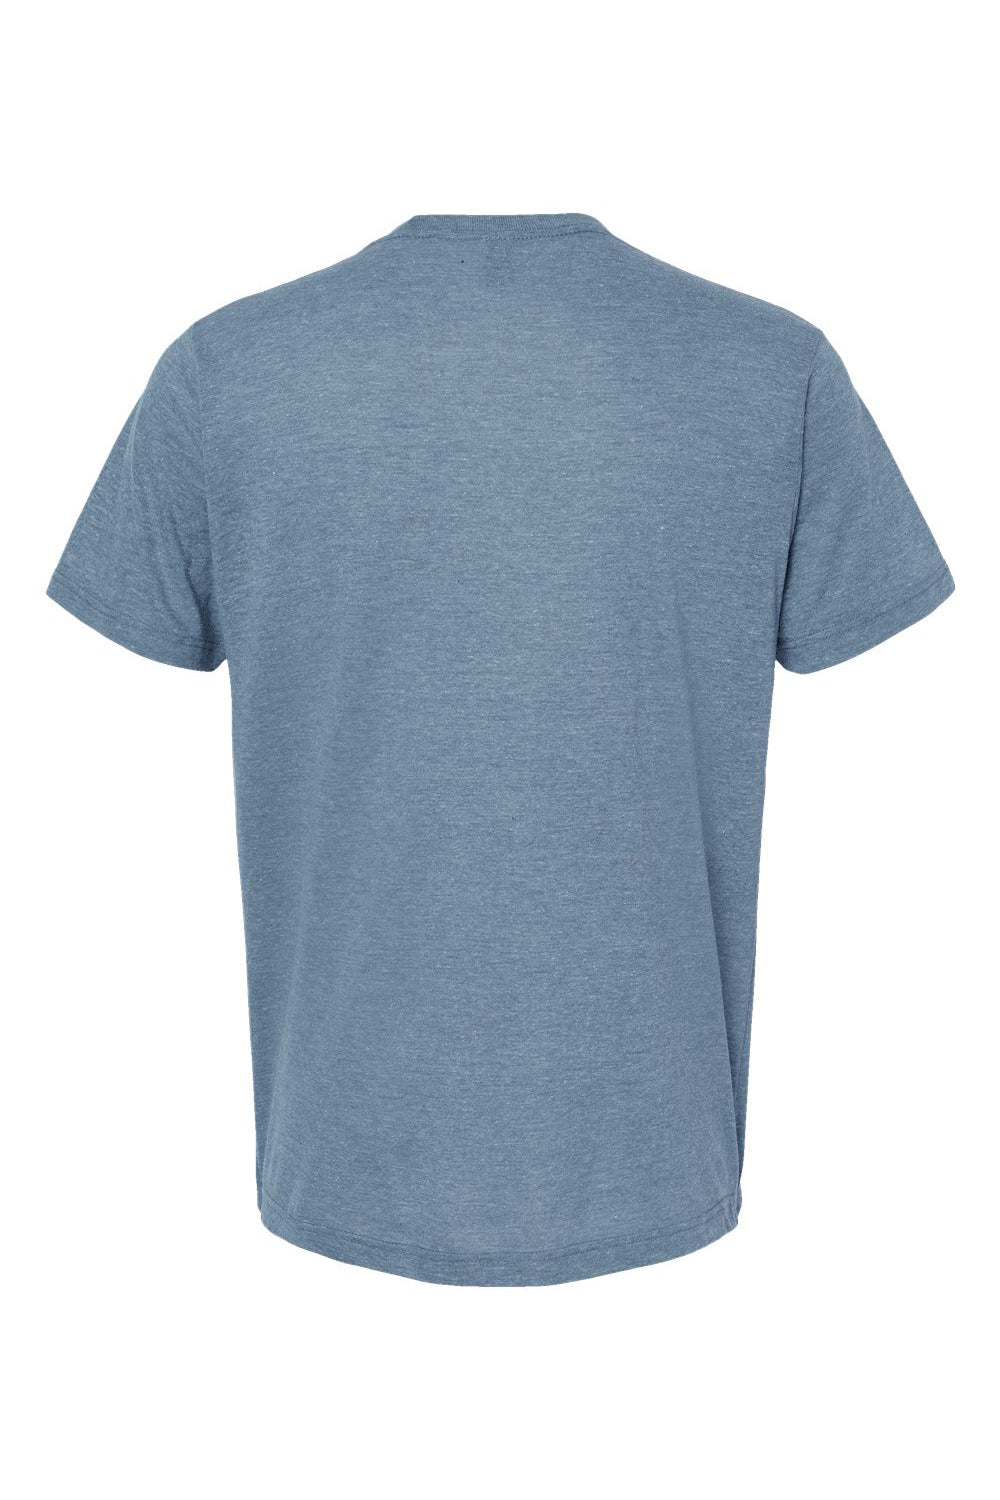 Tultex 254 Mens Short Sleeve Crewneck T-Shirt Denim Blue Flat Back